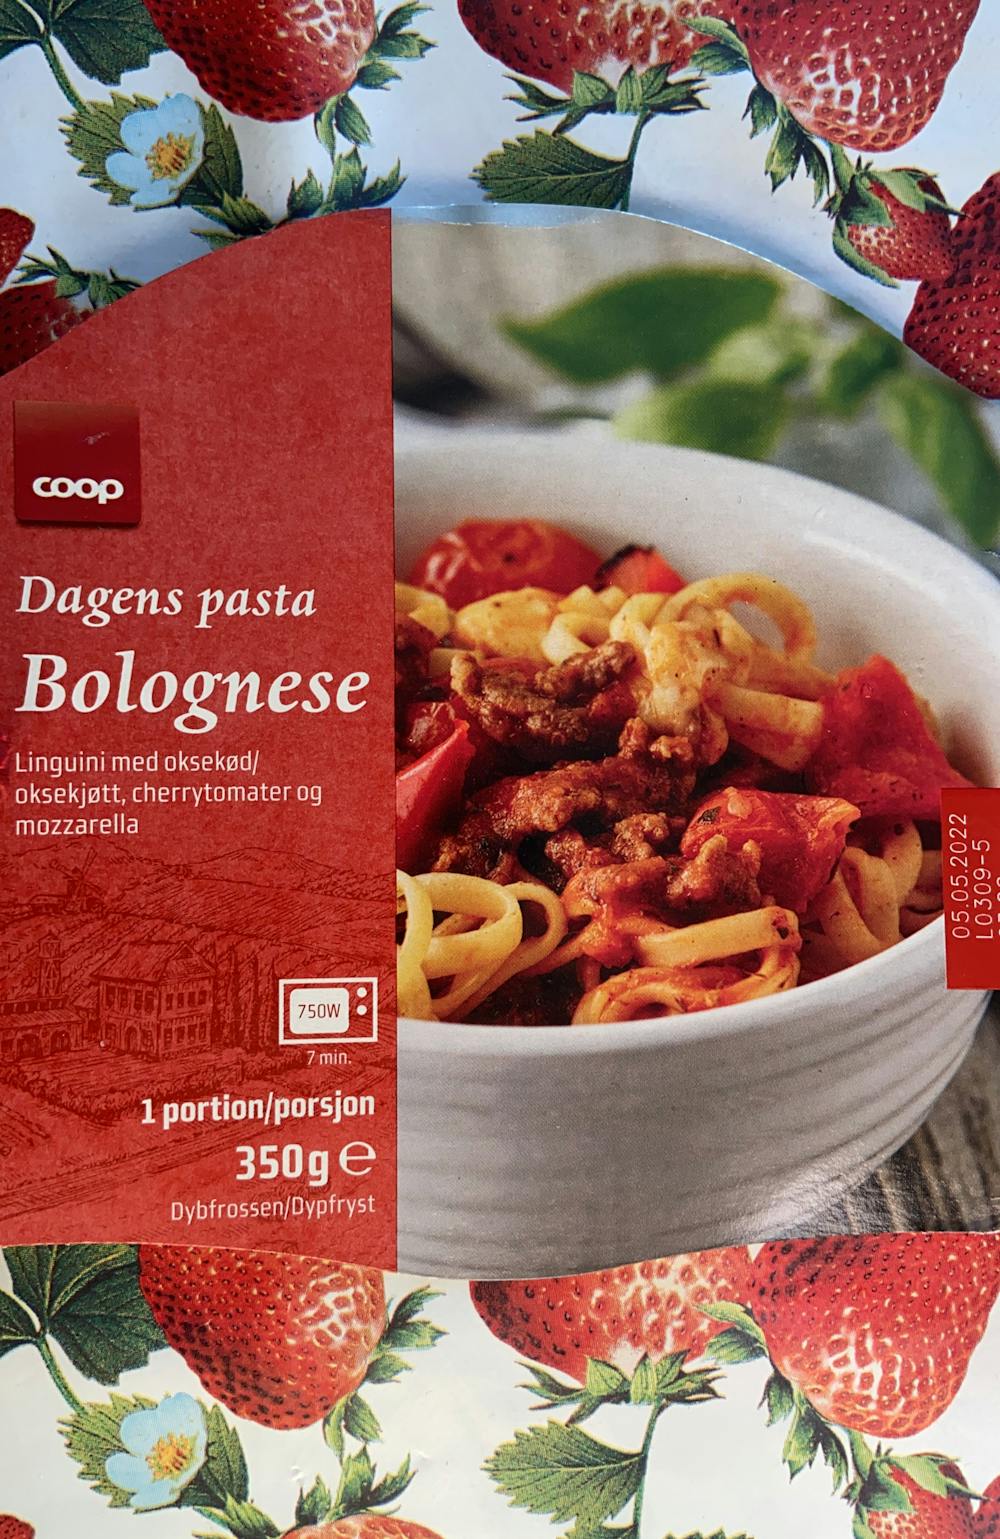 Dagens pasta bolognese, Coop